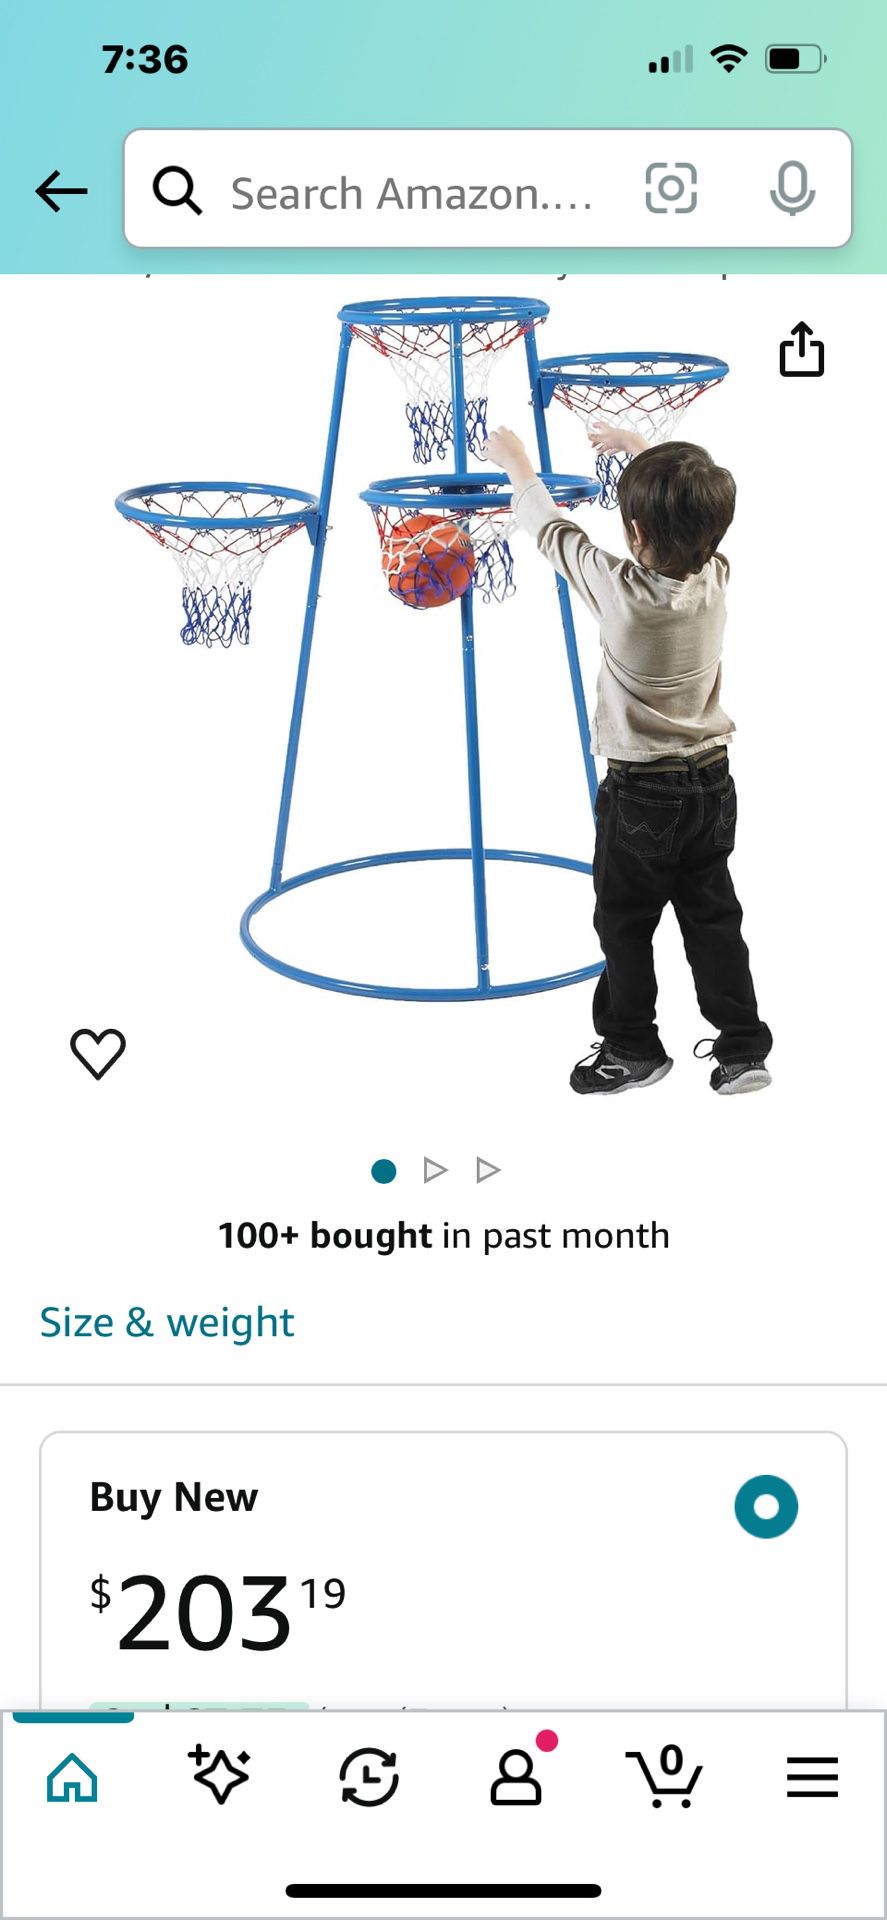 4 Hoop Basketball Set